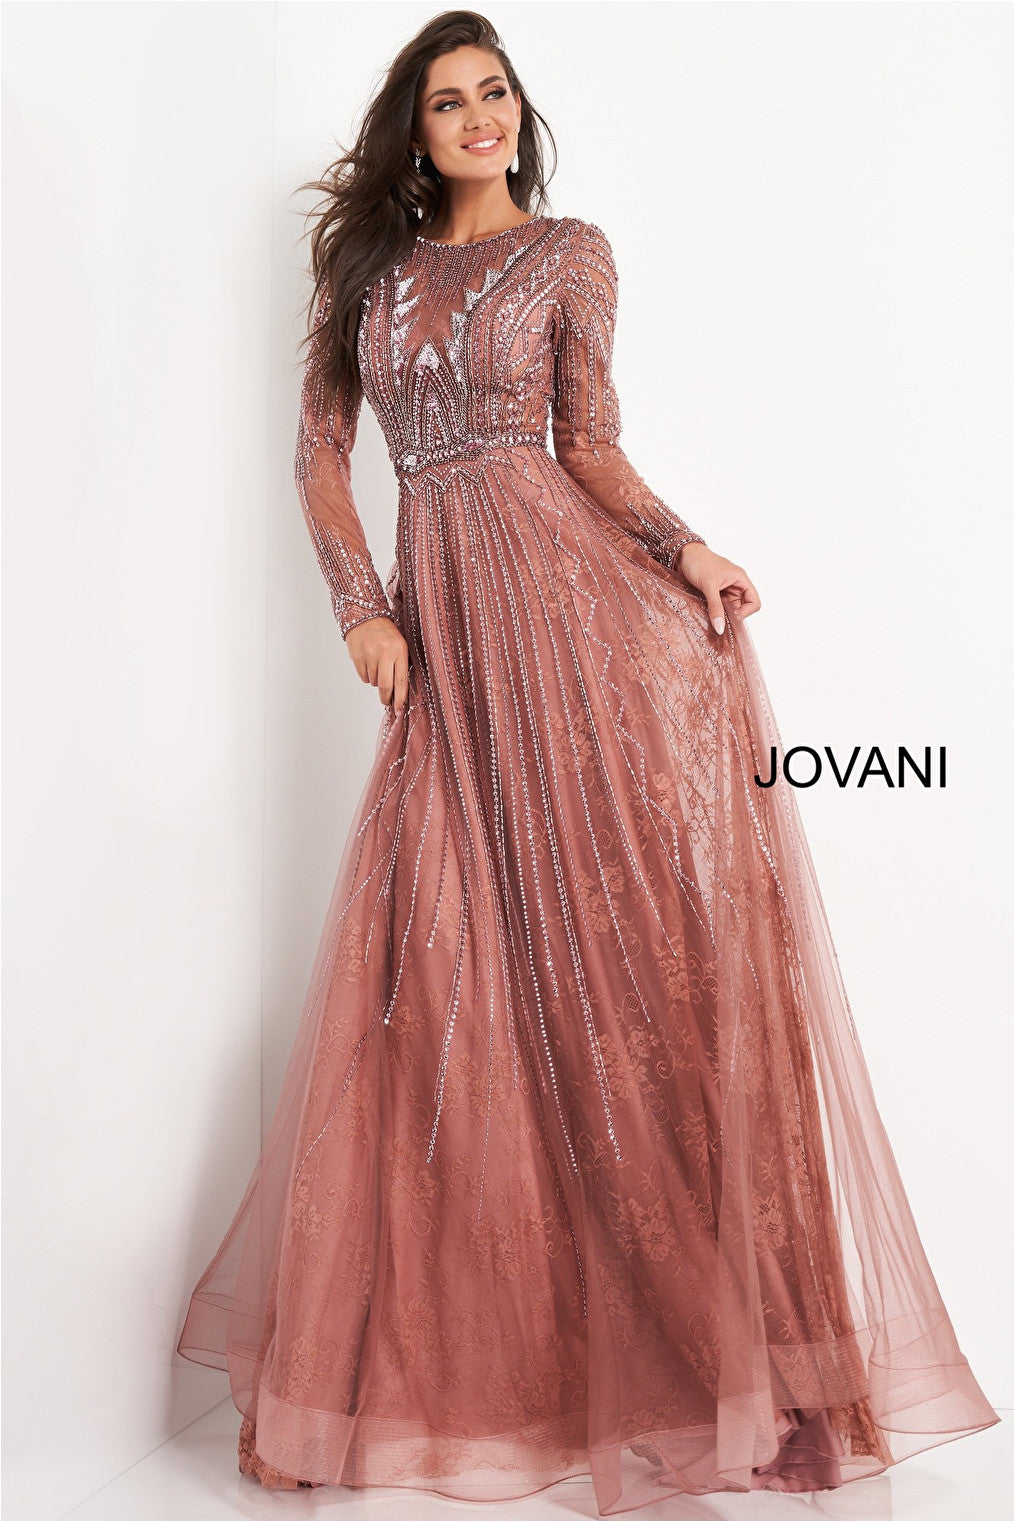 Jovani 04698 Old Rose Embellished Long Sleeve Mother of the Bride Gown